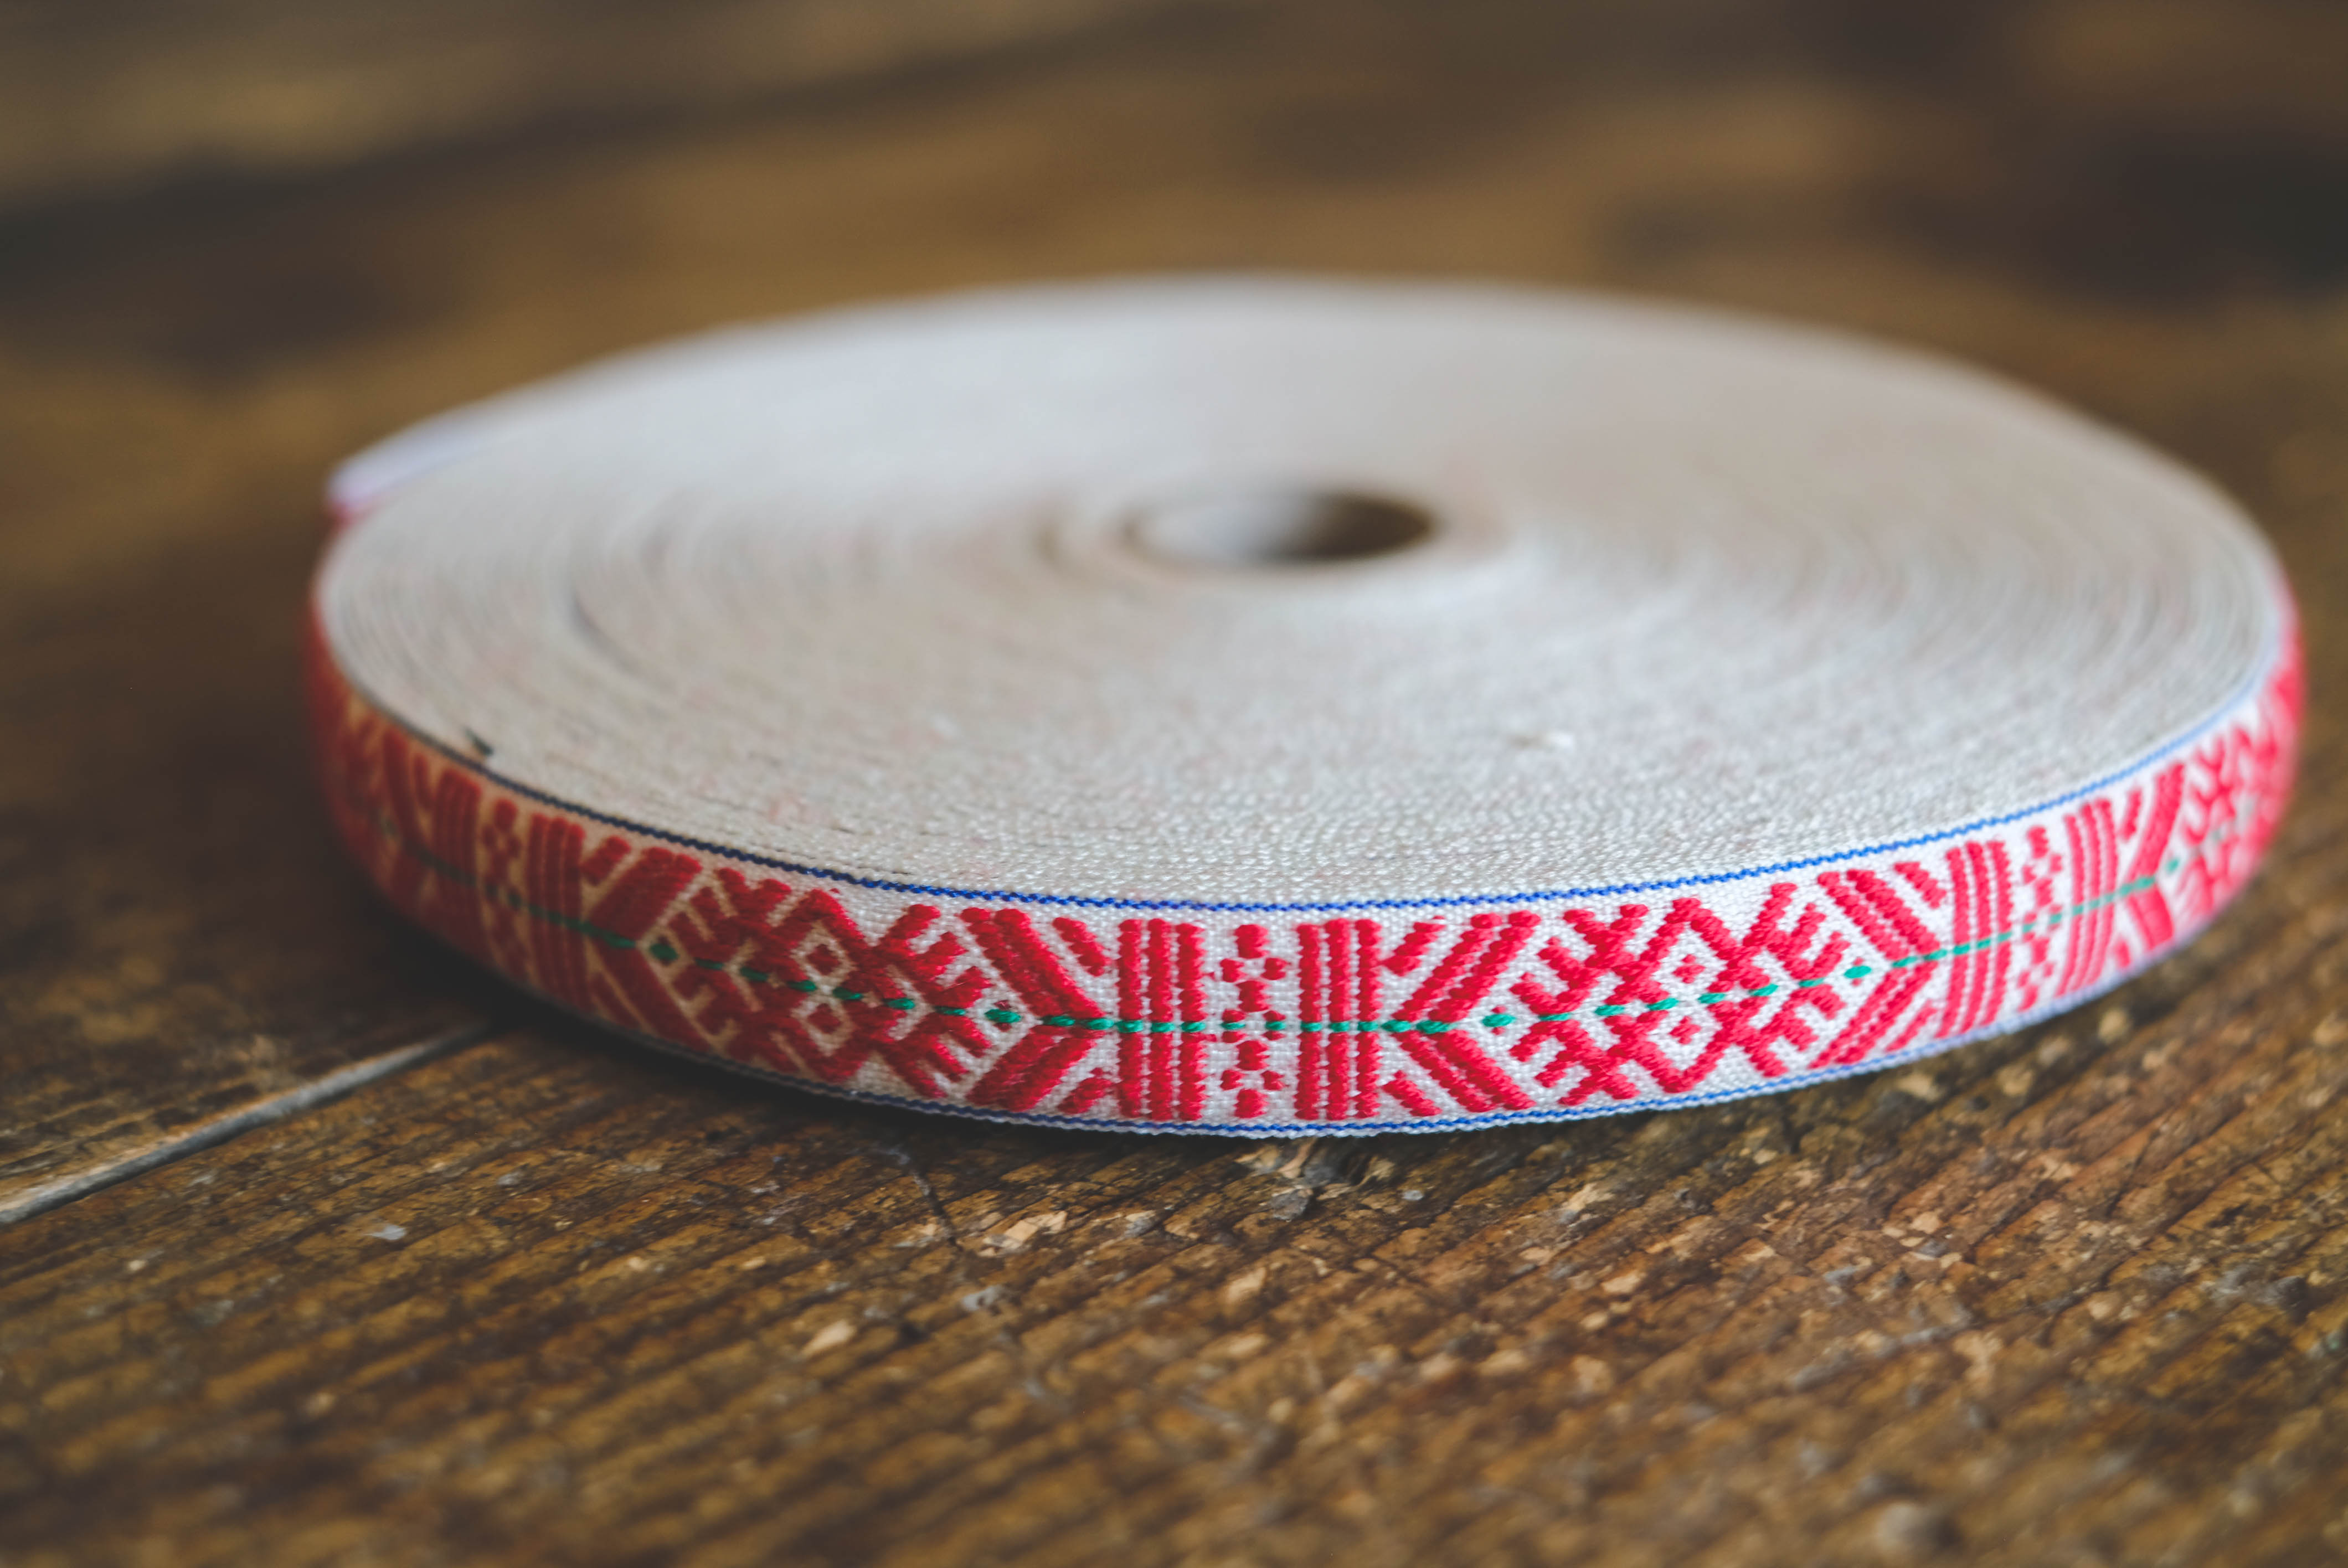 Traditional Swedish ribbon 18mm- red white